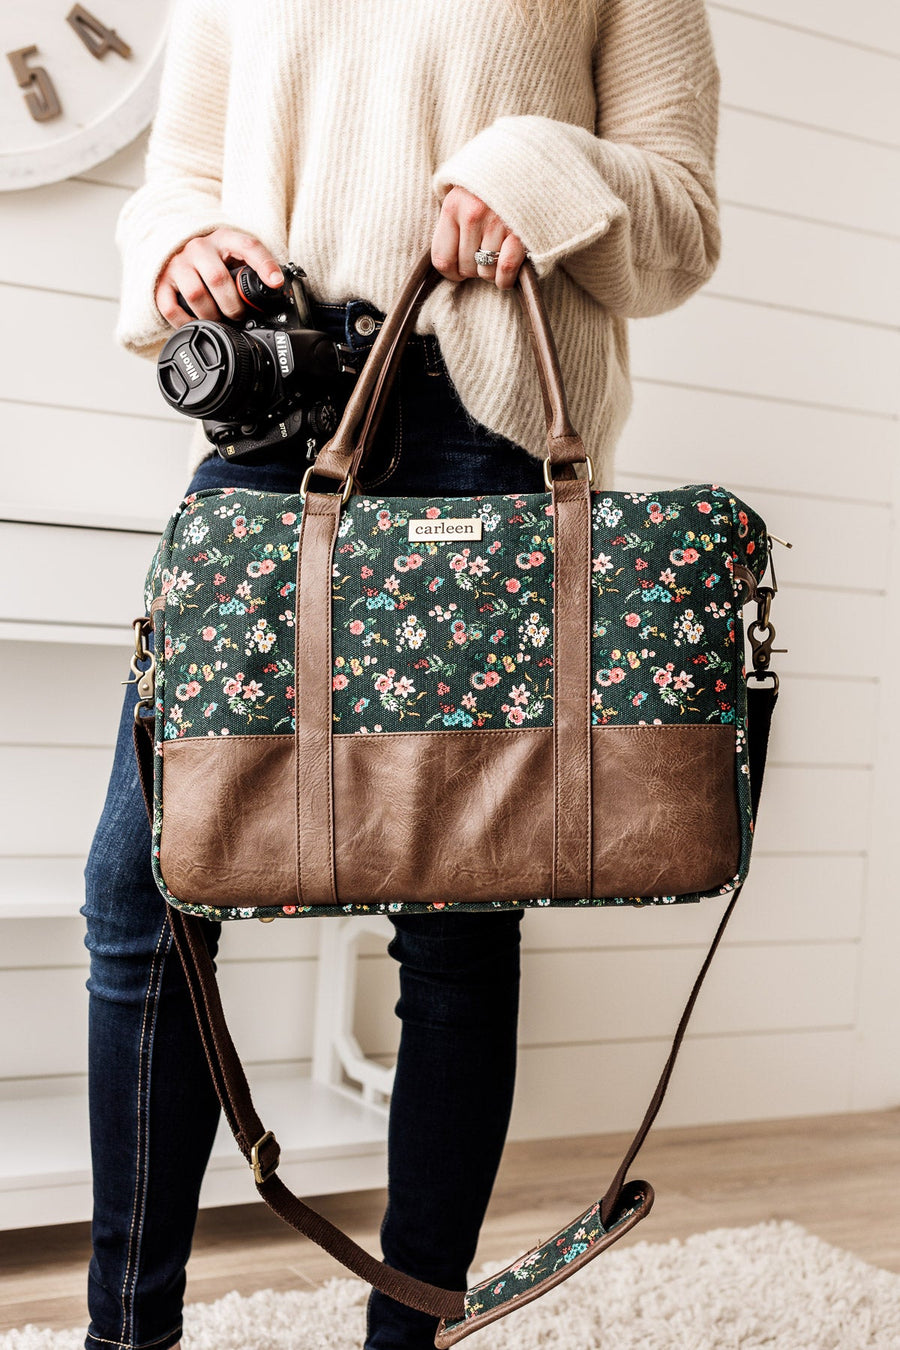 [Slight Defect] Down to Business Canvas Camera Bag - Vintage Floral